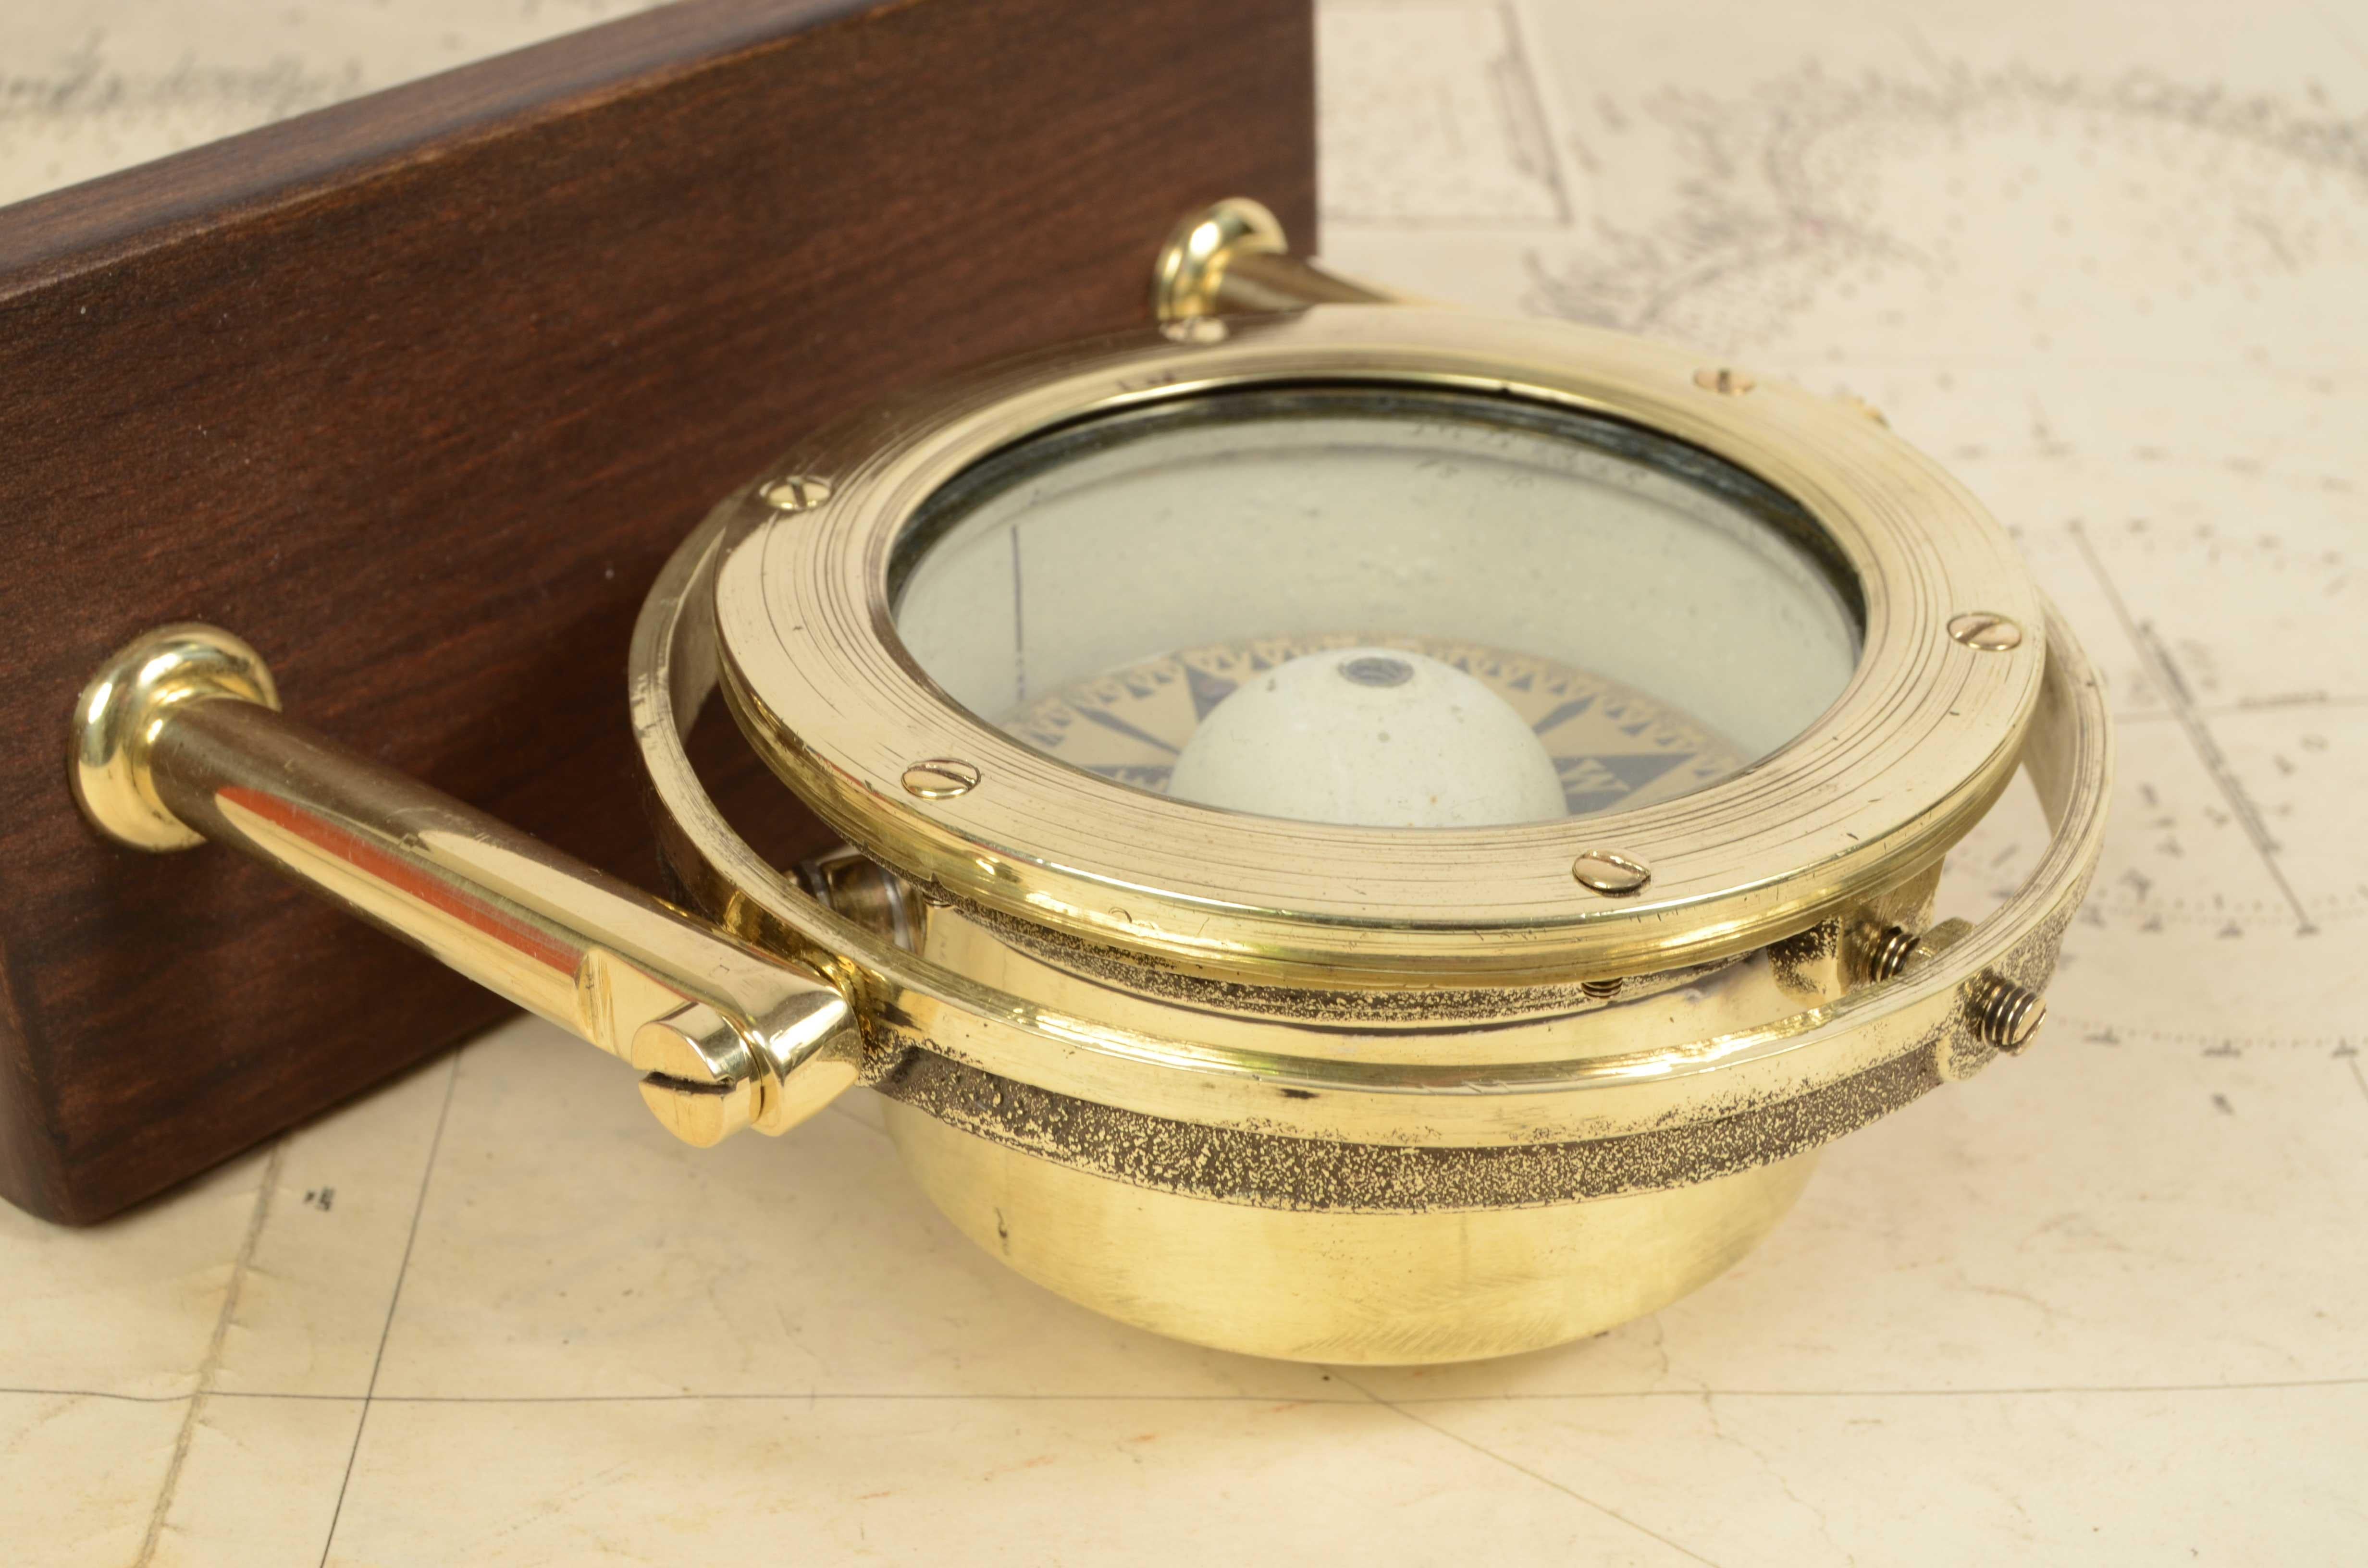 Details about   Nautical Antique Brass Marine Compass Marine Leather Case Collectibles  5 pcs 